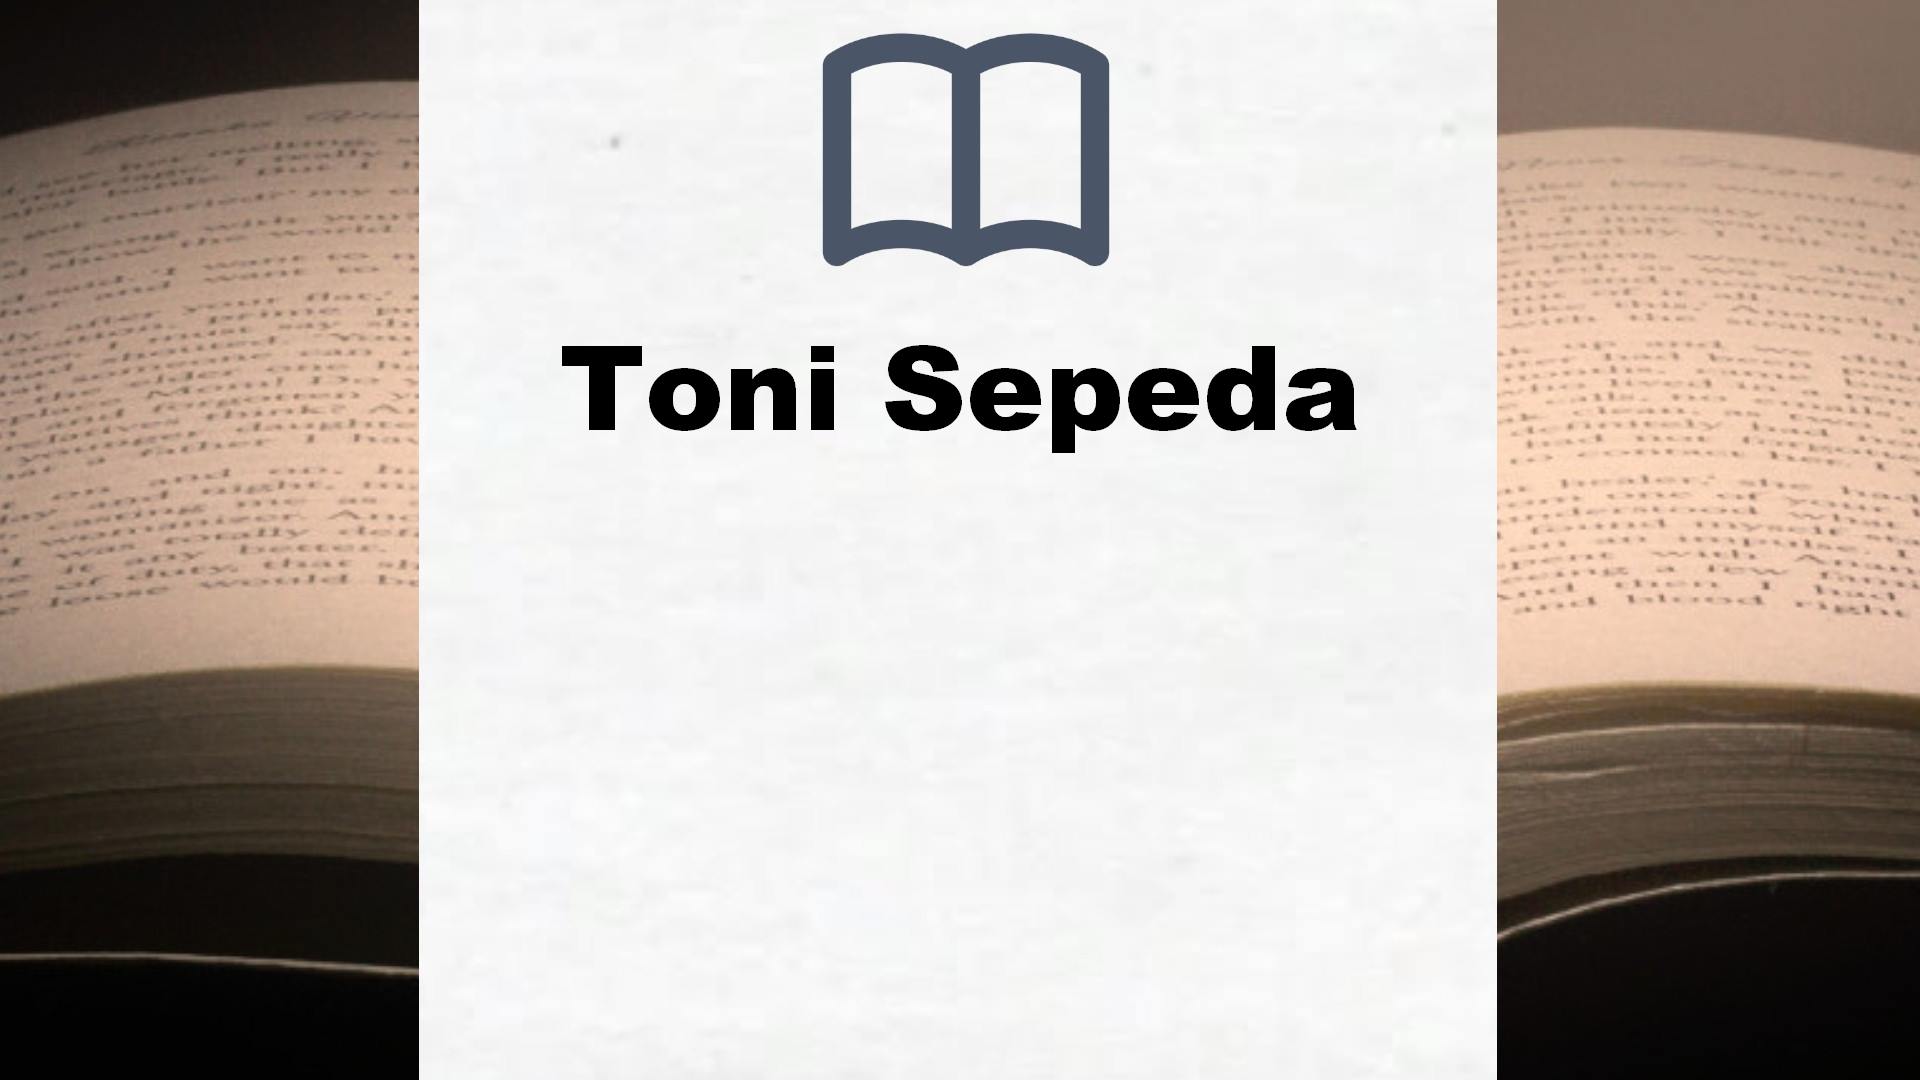 Libros Toni Sepeda